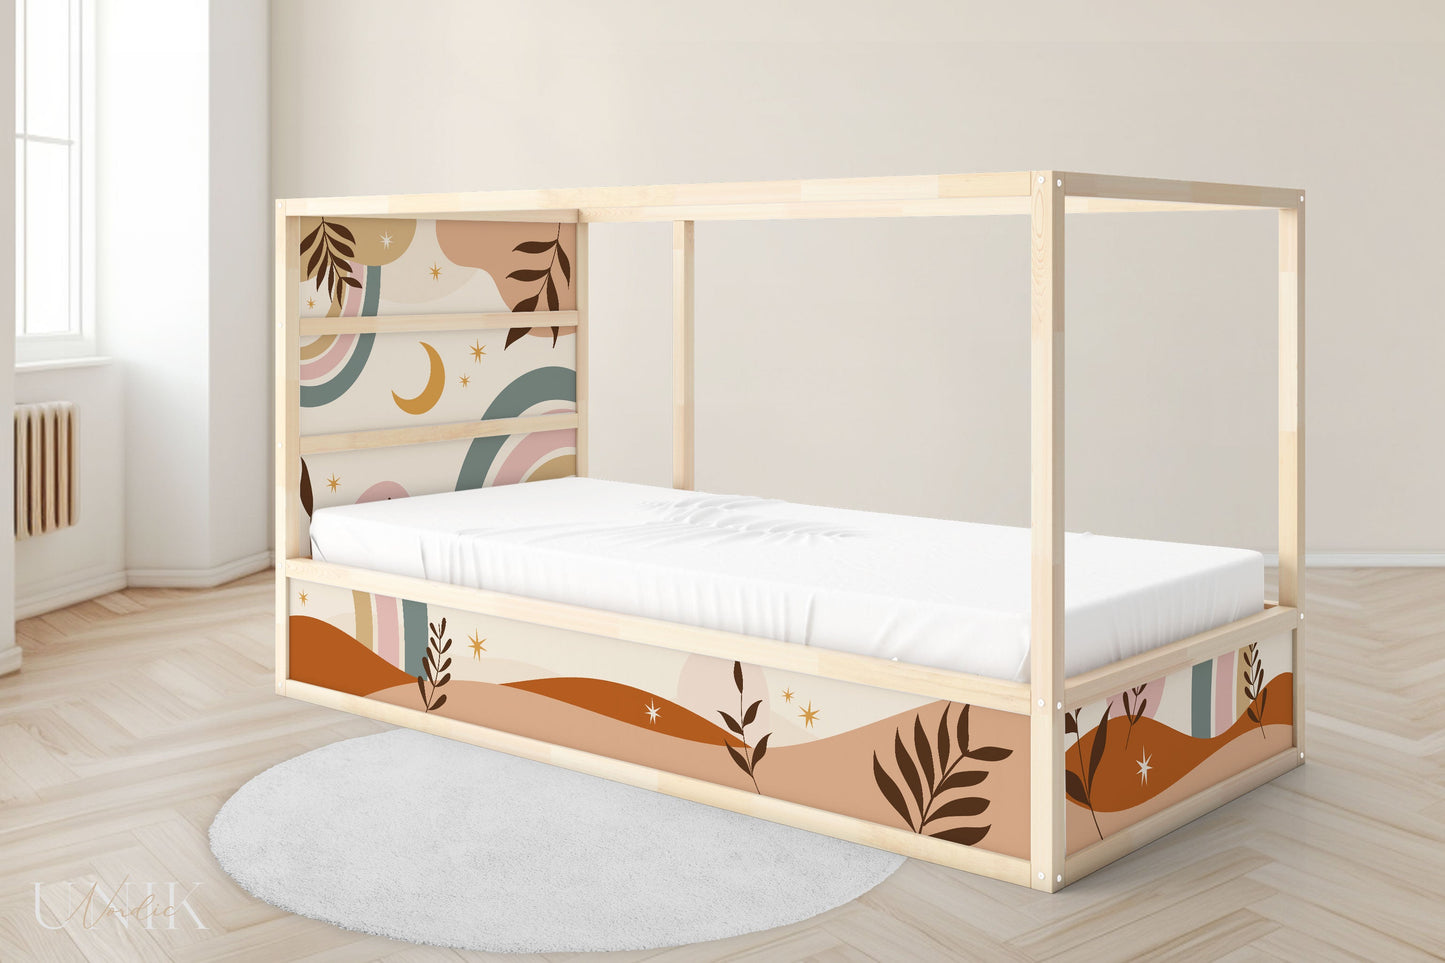 IKEA Kura Bed Sticker Set - Boho Shapes